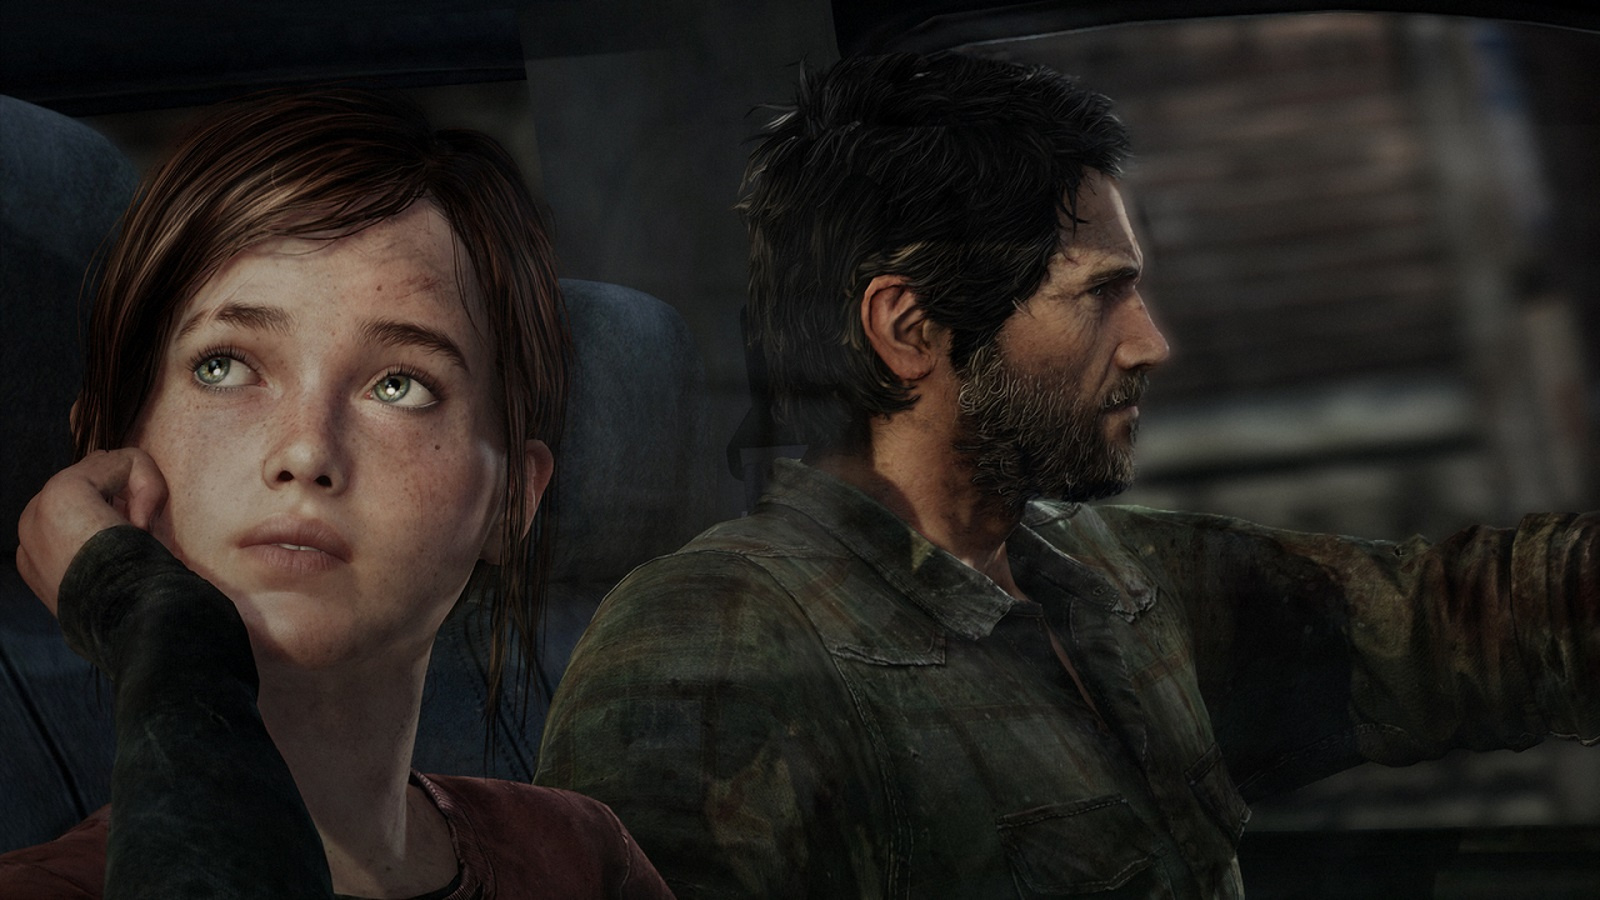 Намёк на ремейк The Last of Us обнаружили в новой вакансии Sony